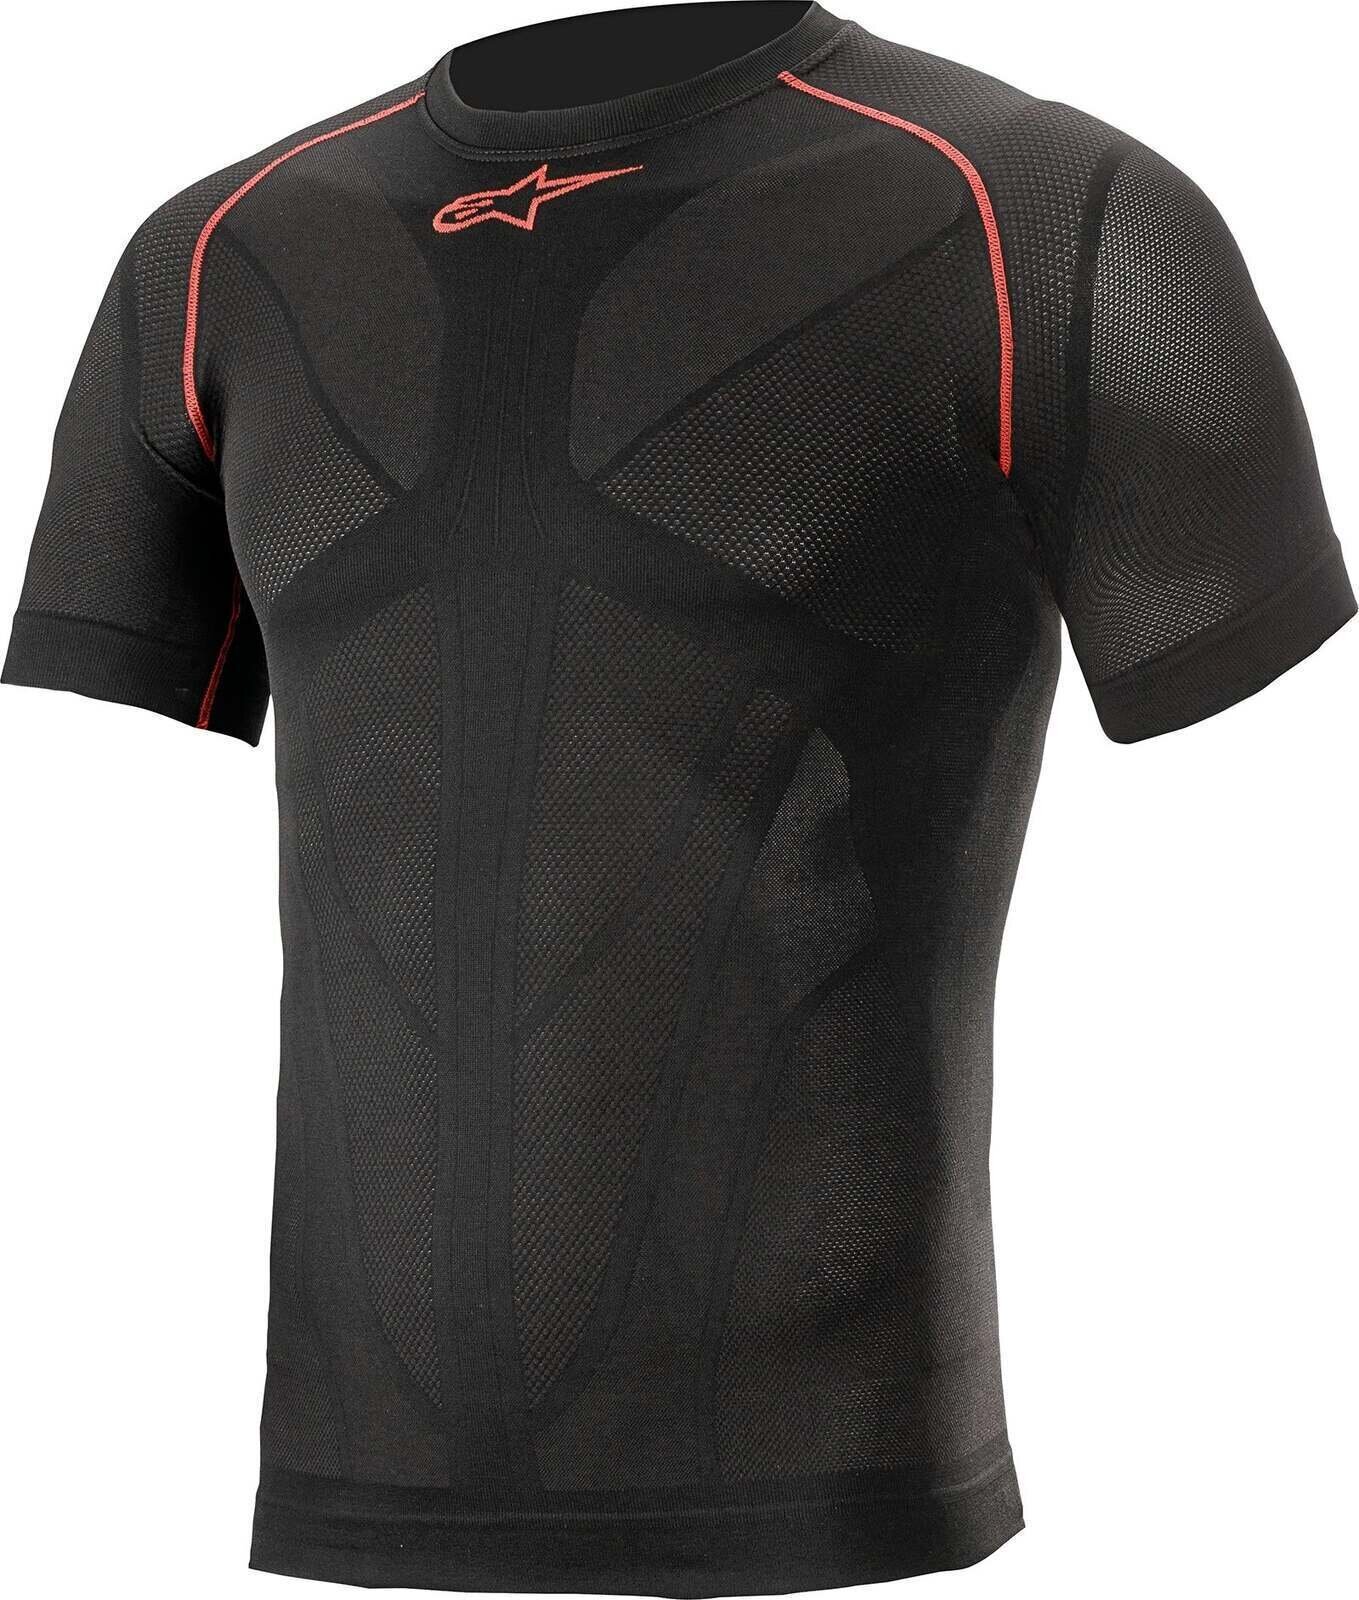 Moto abbigliamento termico Alpinestars Ride Tech V2 Top Short Sleeve Summer Black Red XS/S